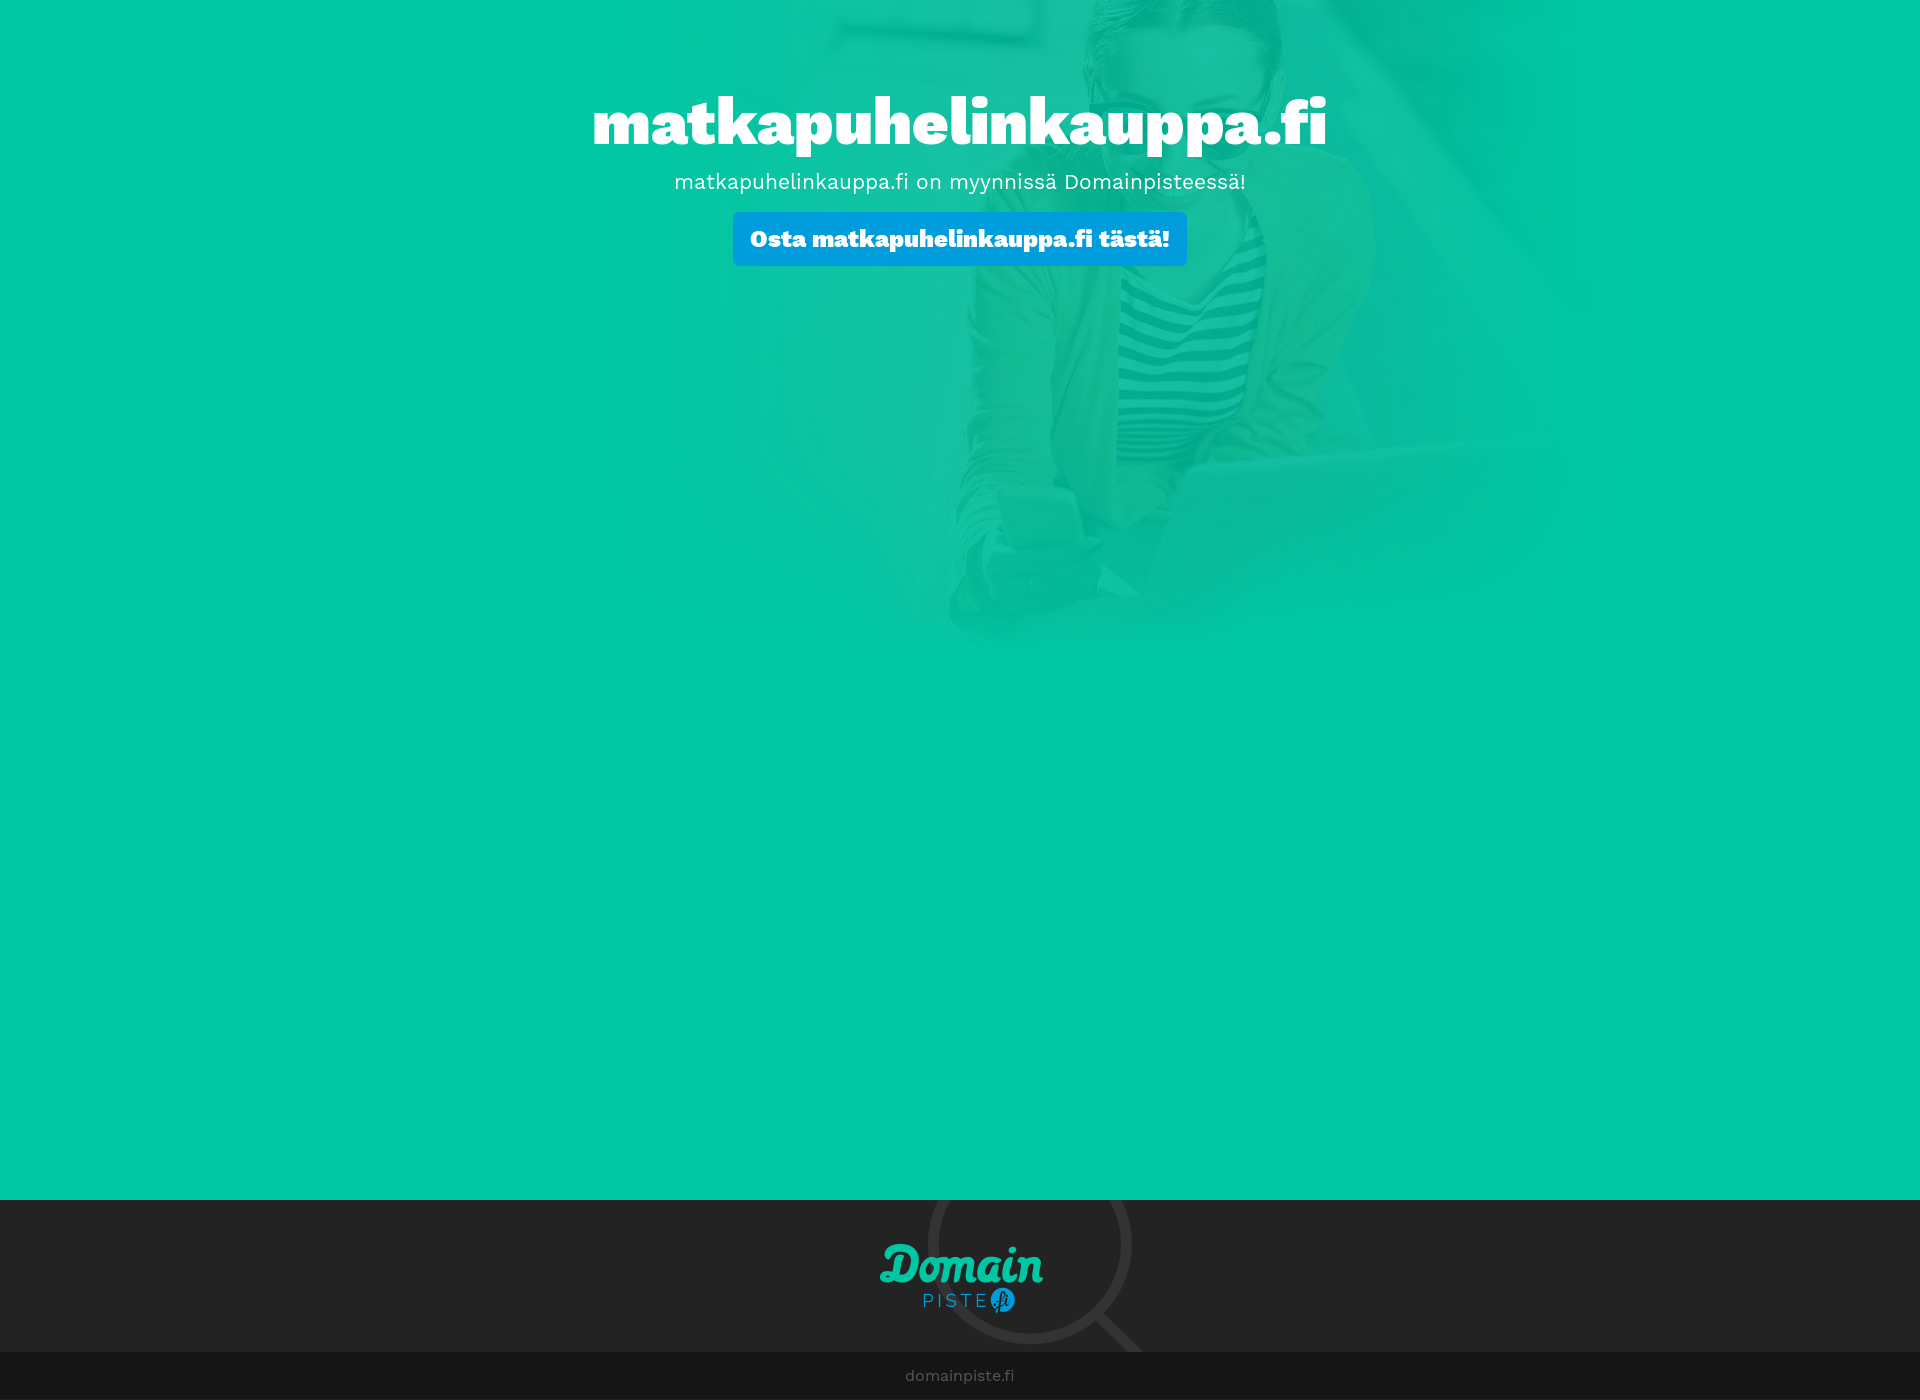 Screenshot for matkapuhelinkauppa.fi